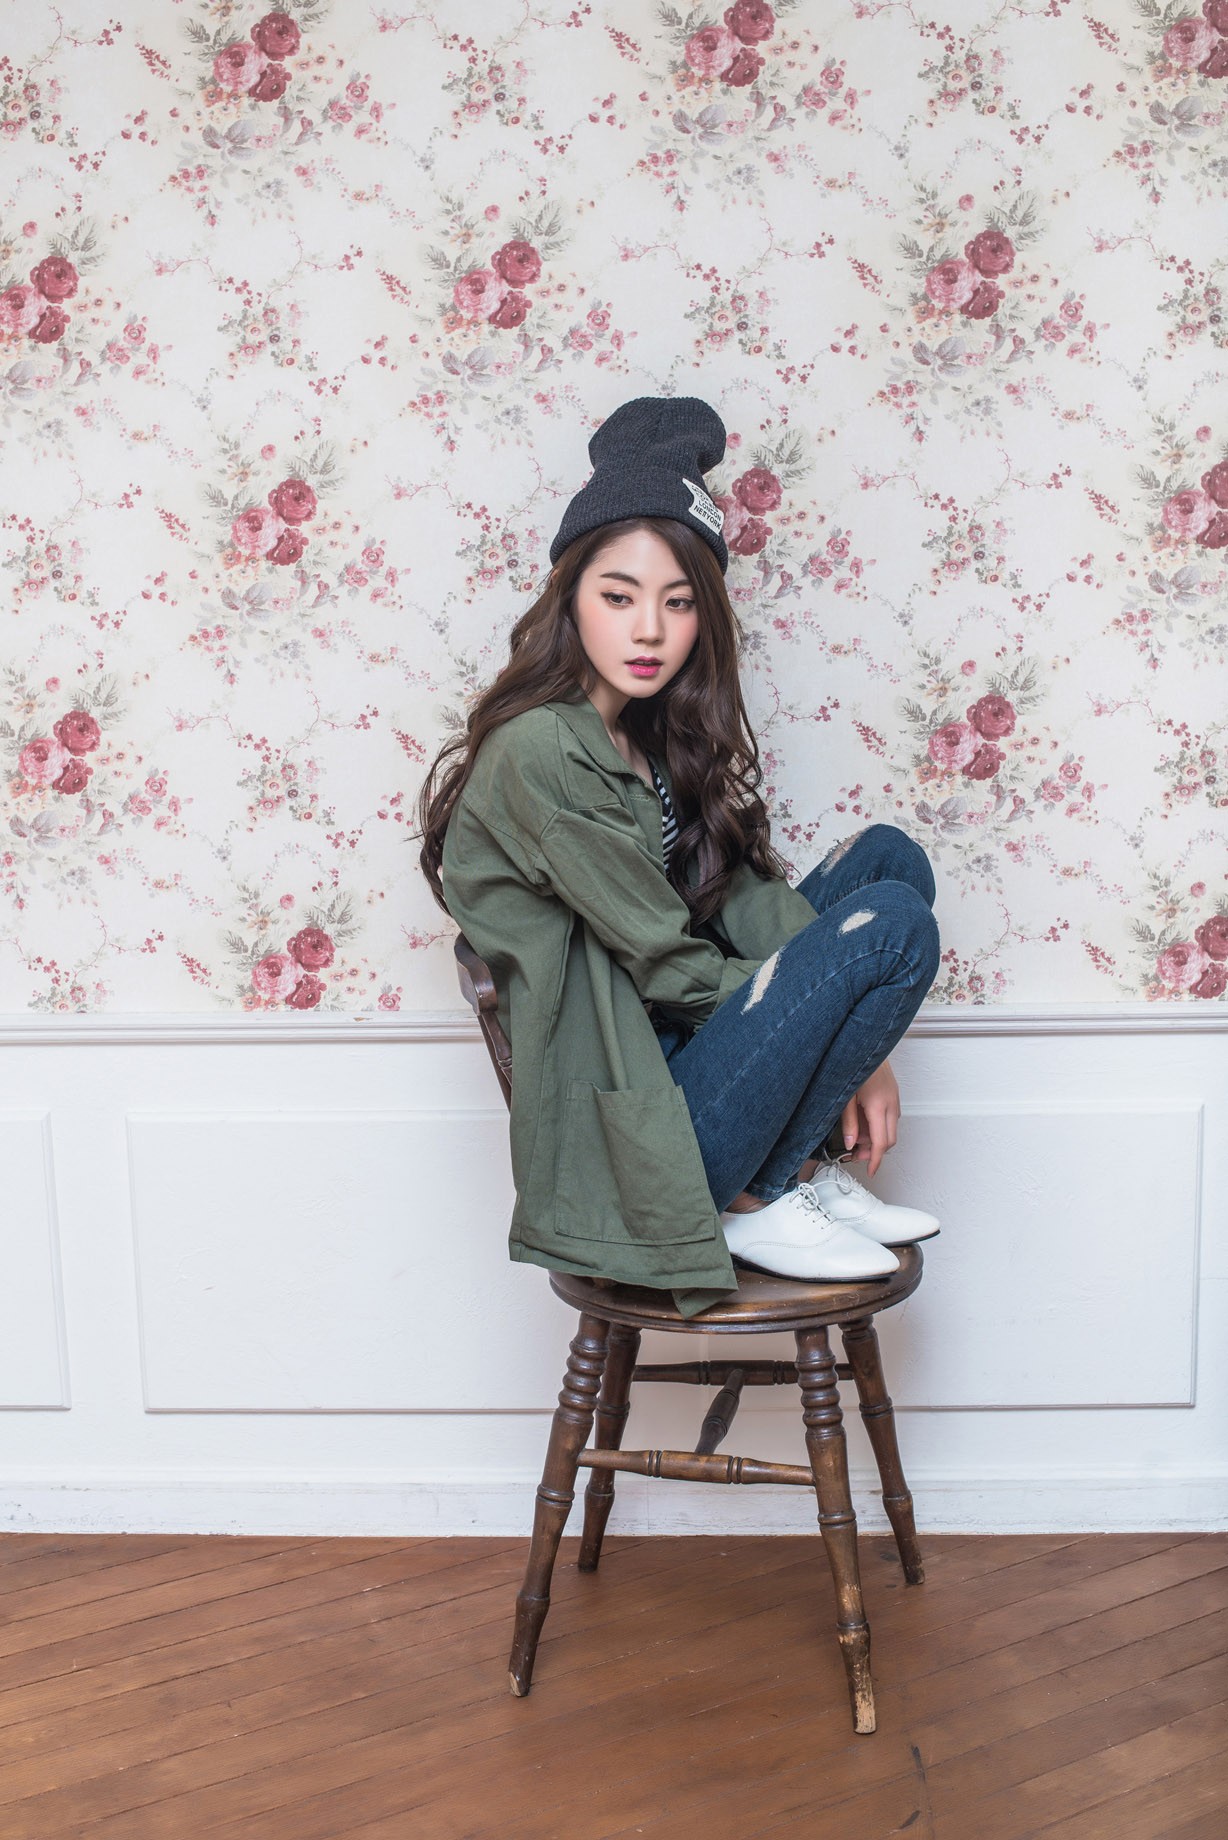 Chae Eun Asian Women Portrait Display Brunette Torn Jeans Sitting Green Coat Pink Lipstick 1228x1840